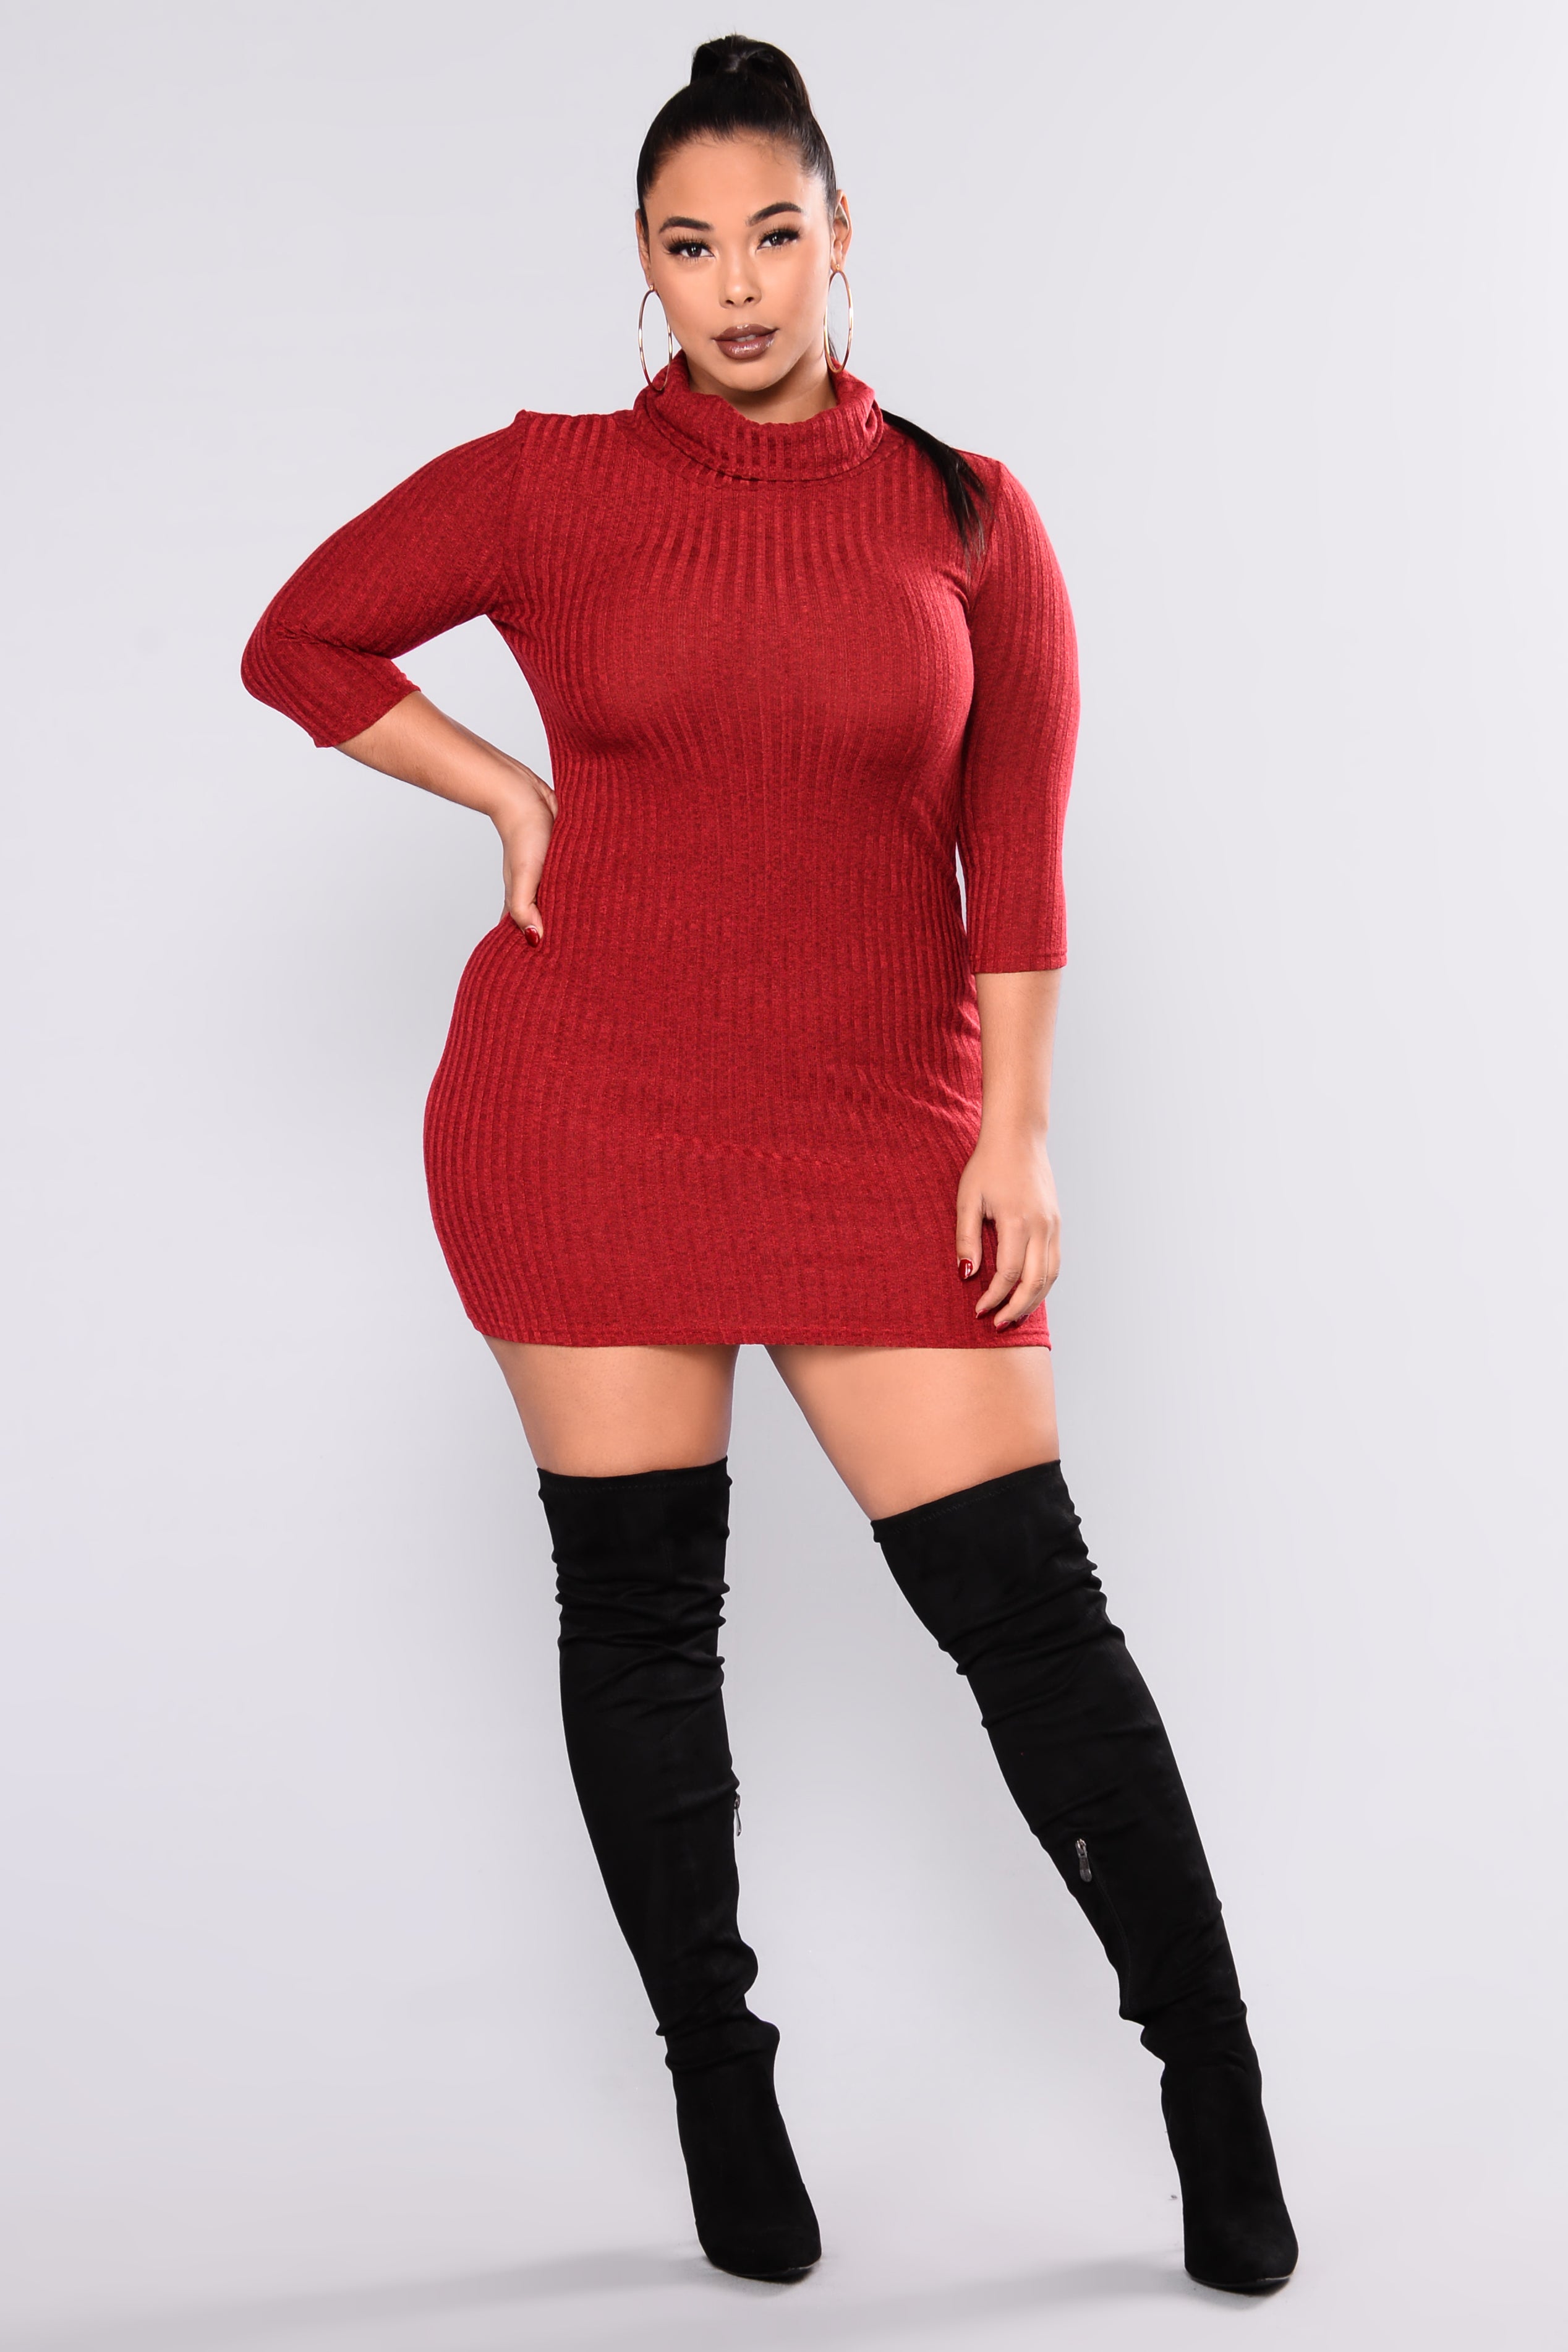 fashion nova plus size sweater dress with boots